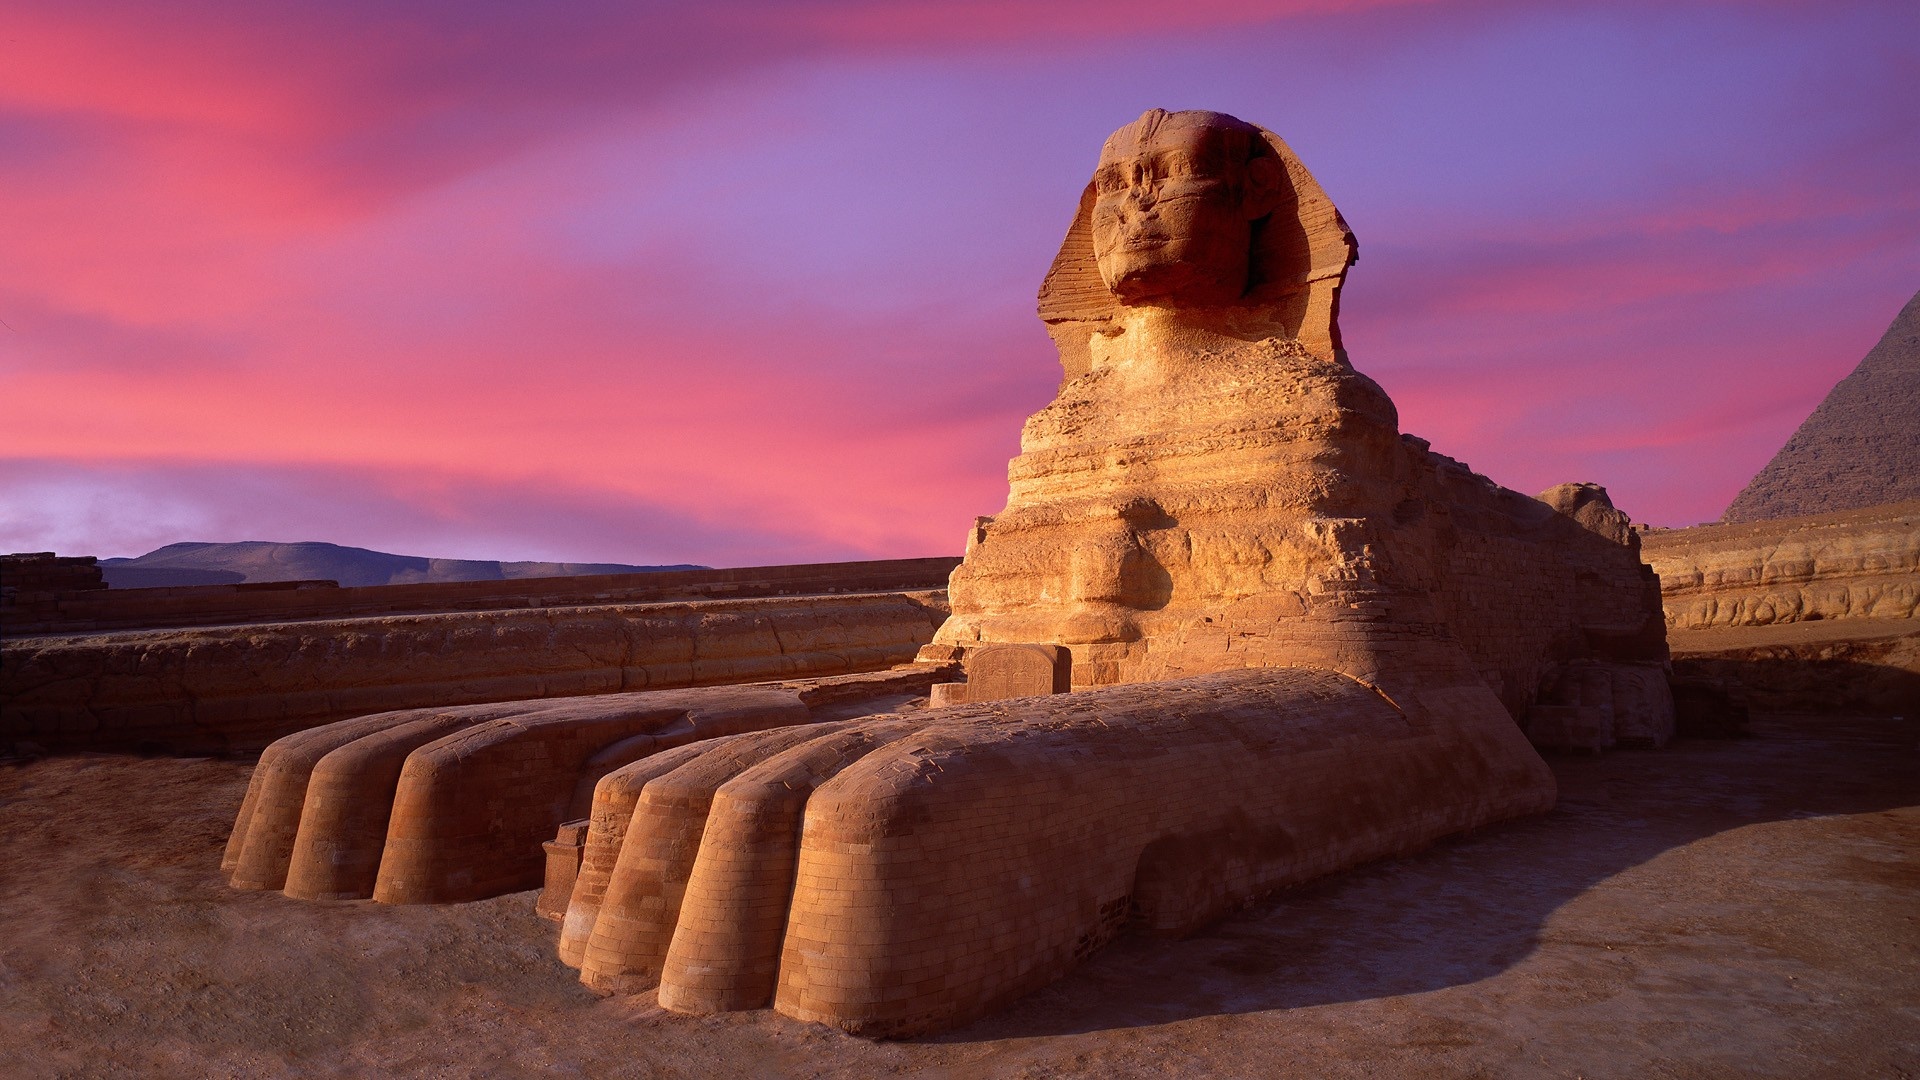 Upper Egypt winter season, Tourism optimism, Luxor travels, Mediterranean observer, 1920x1080 Full HD Desktop